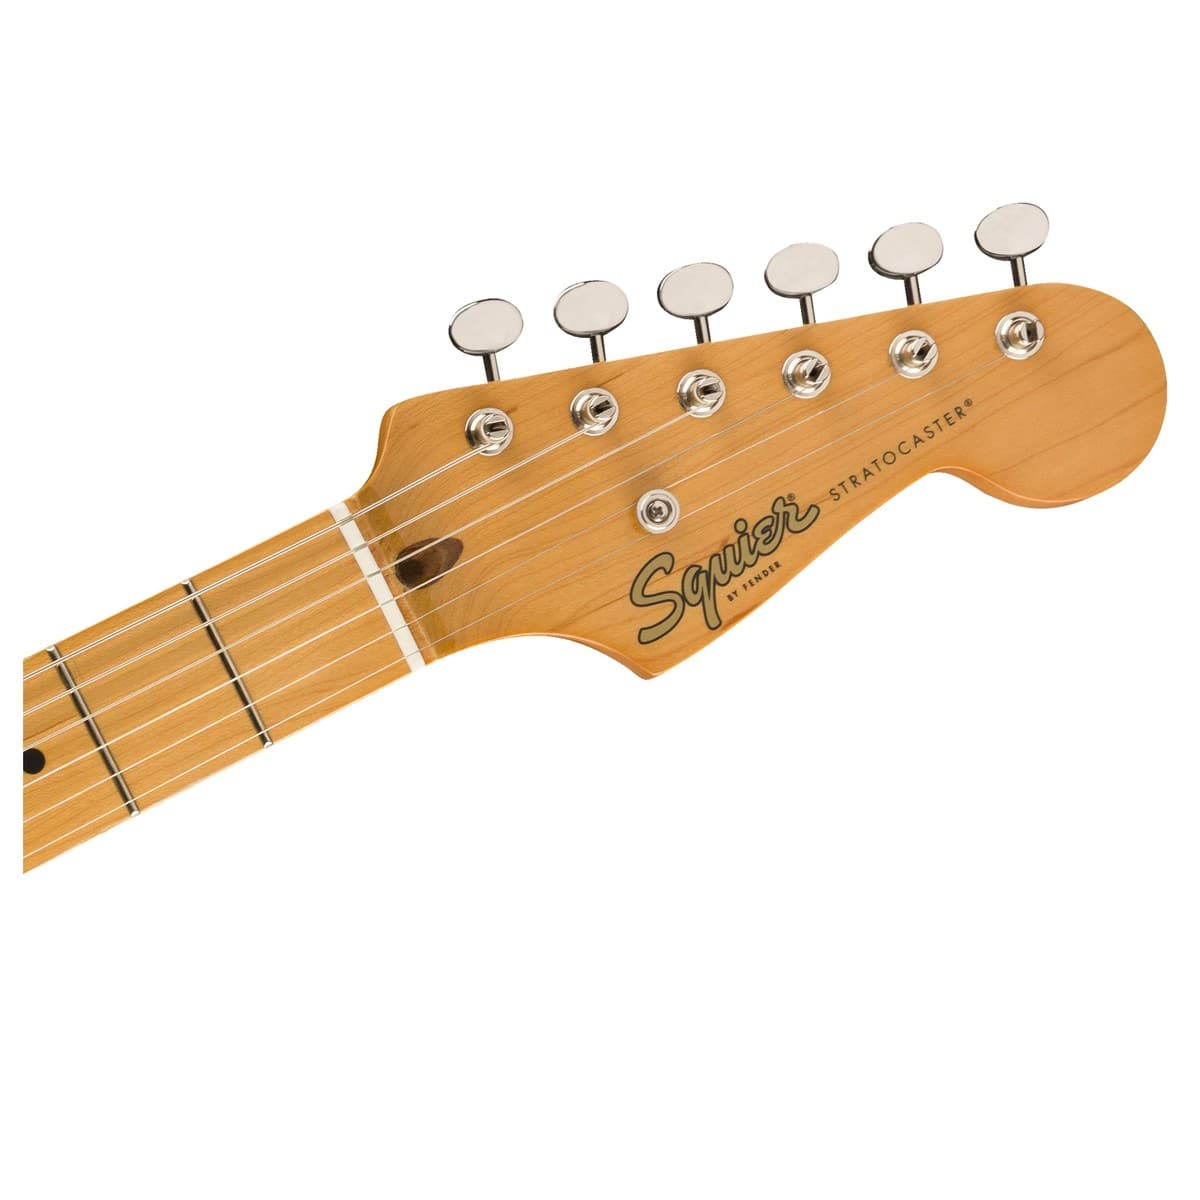 Squier Classic Vibe '50s Stratocaster - Maple Fingerboard - Black